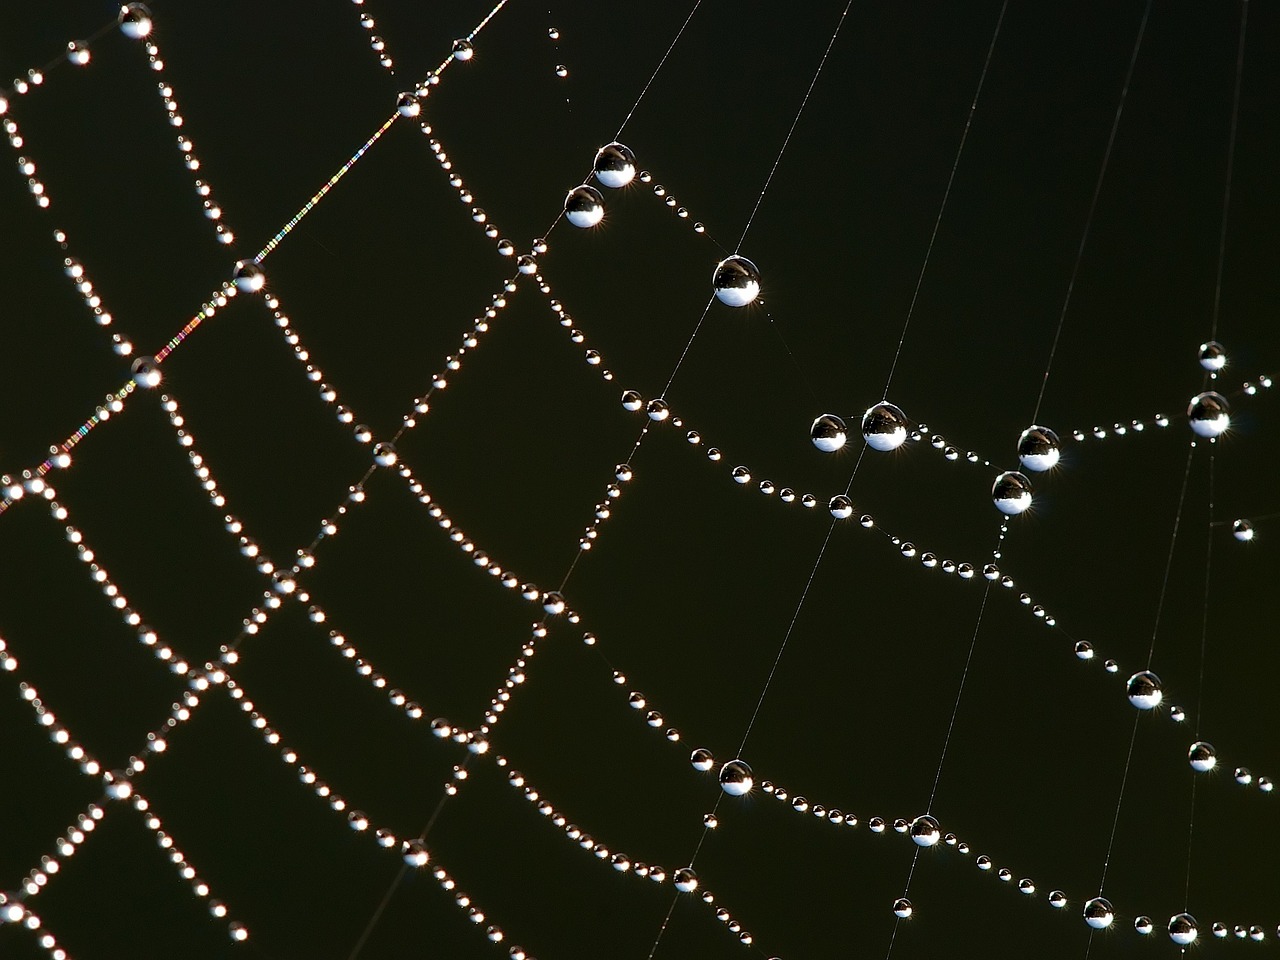 spider web dew drops droplets free photo